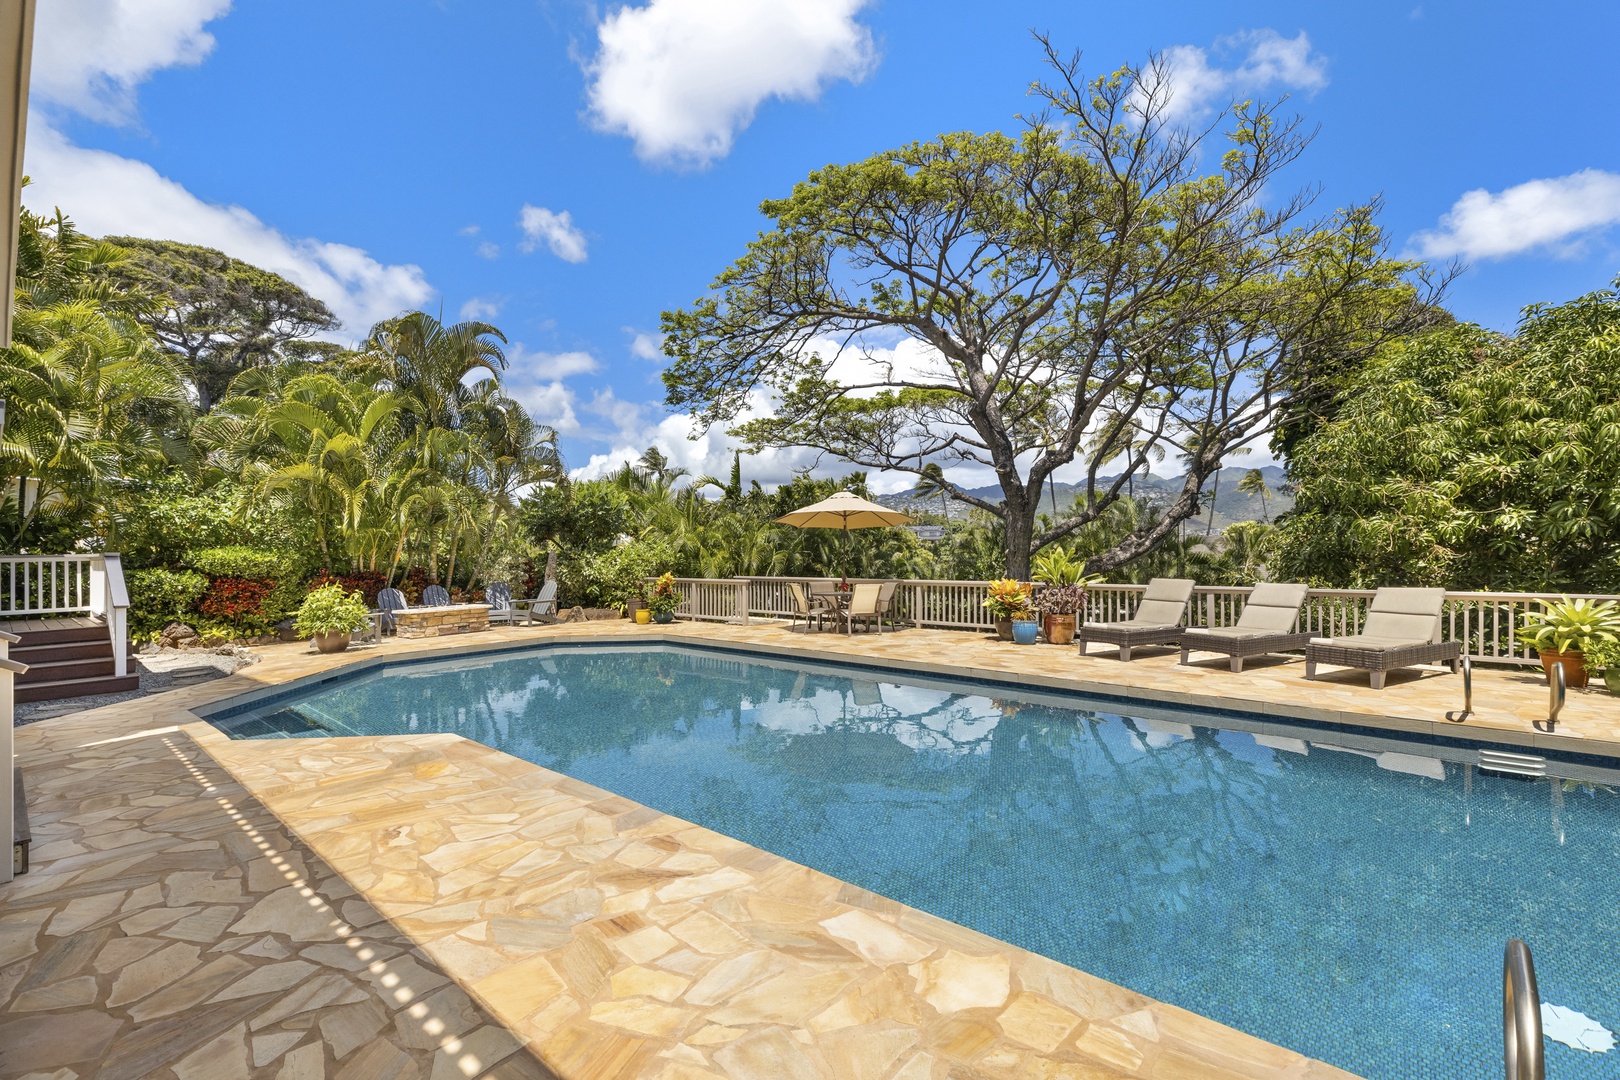 Honolulu Vacation Rentals, Hale Le'ahi - Take a dip or lounge poolside